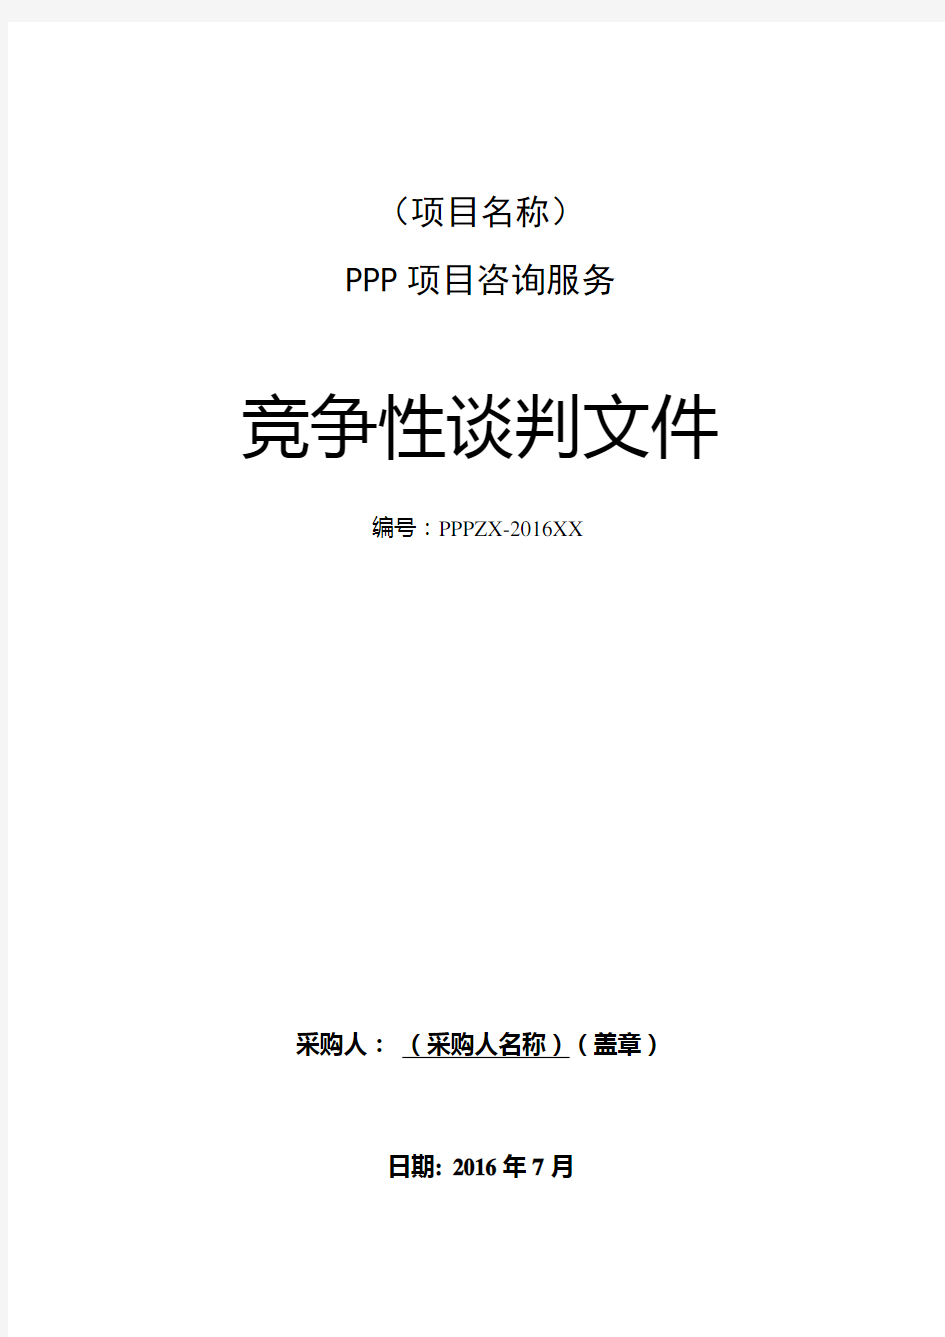 PPP项目咨询服务竞争性谈判文件(模板)